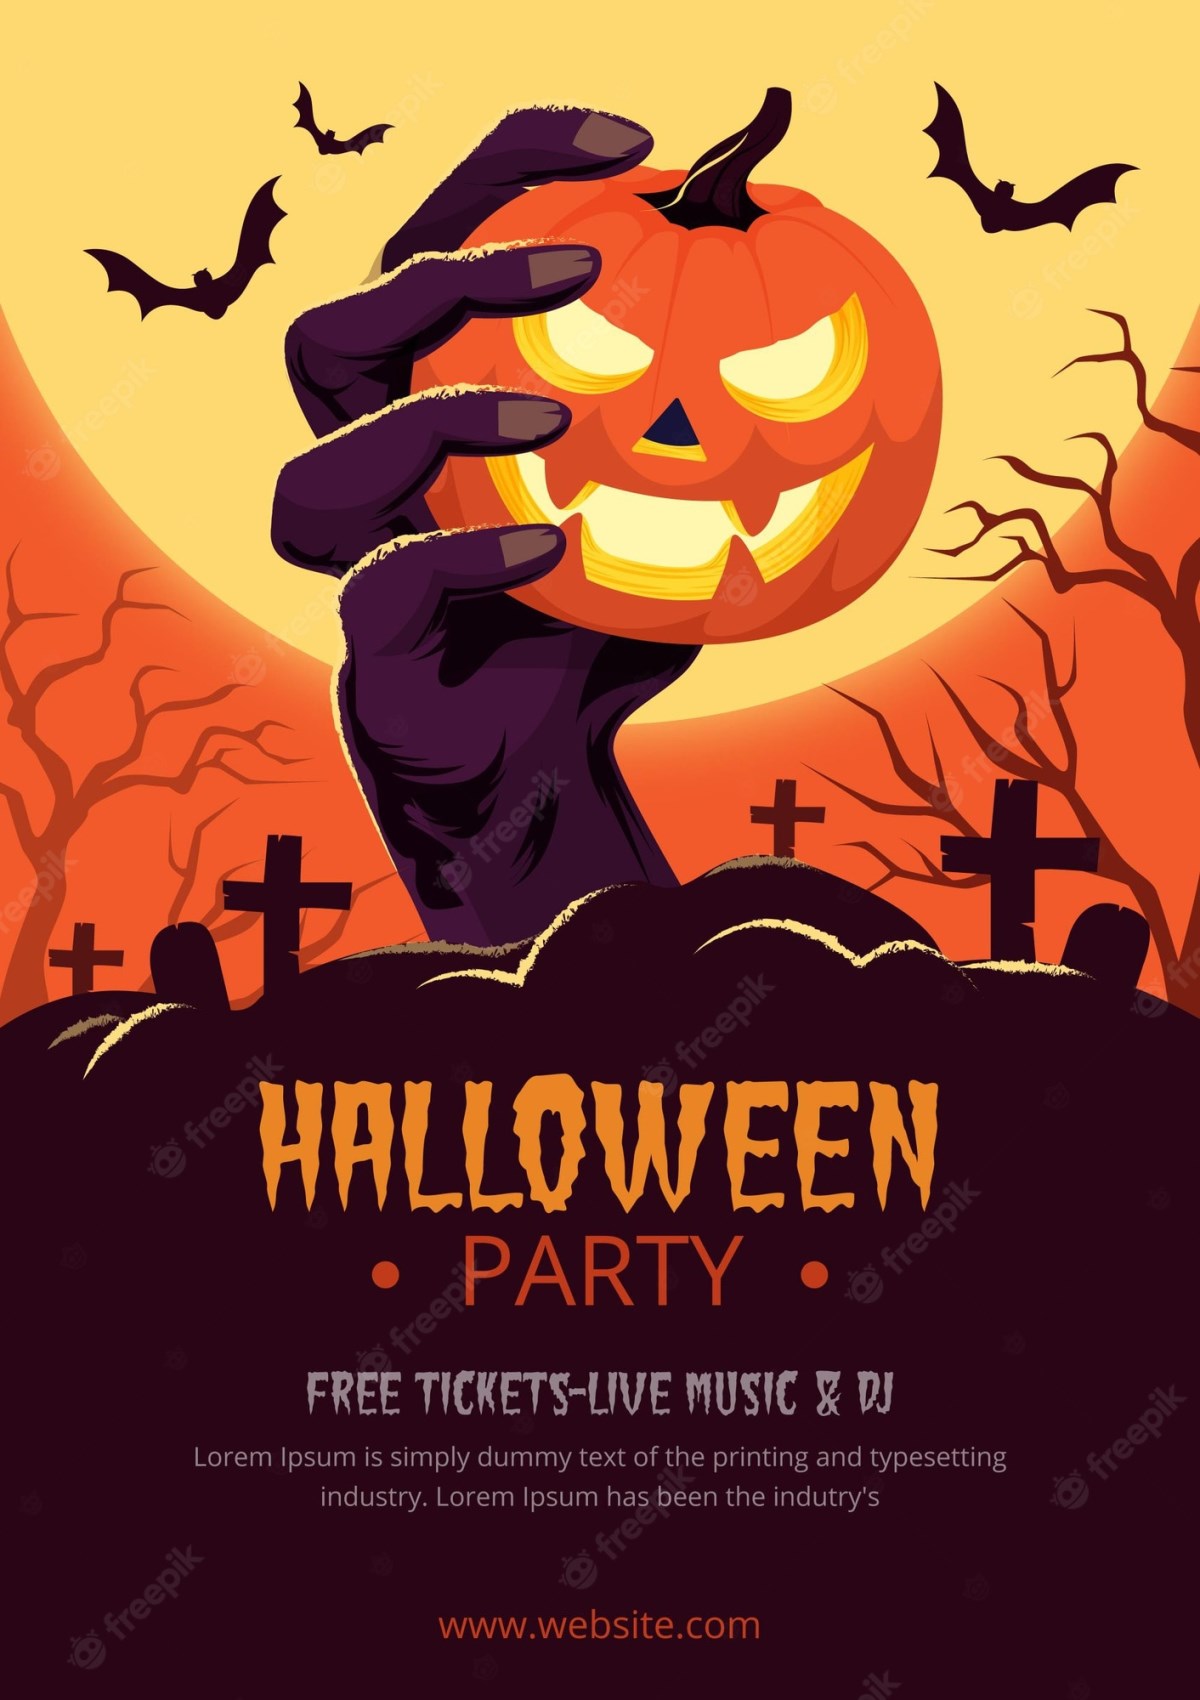 6 Creative Halloween Party Poster Ideas